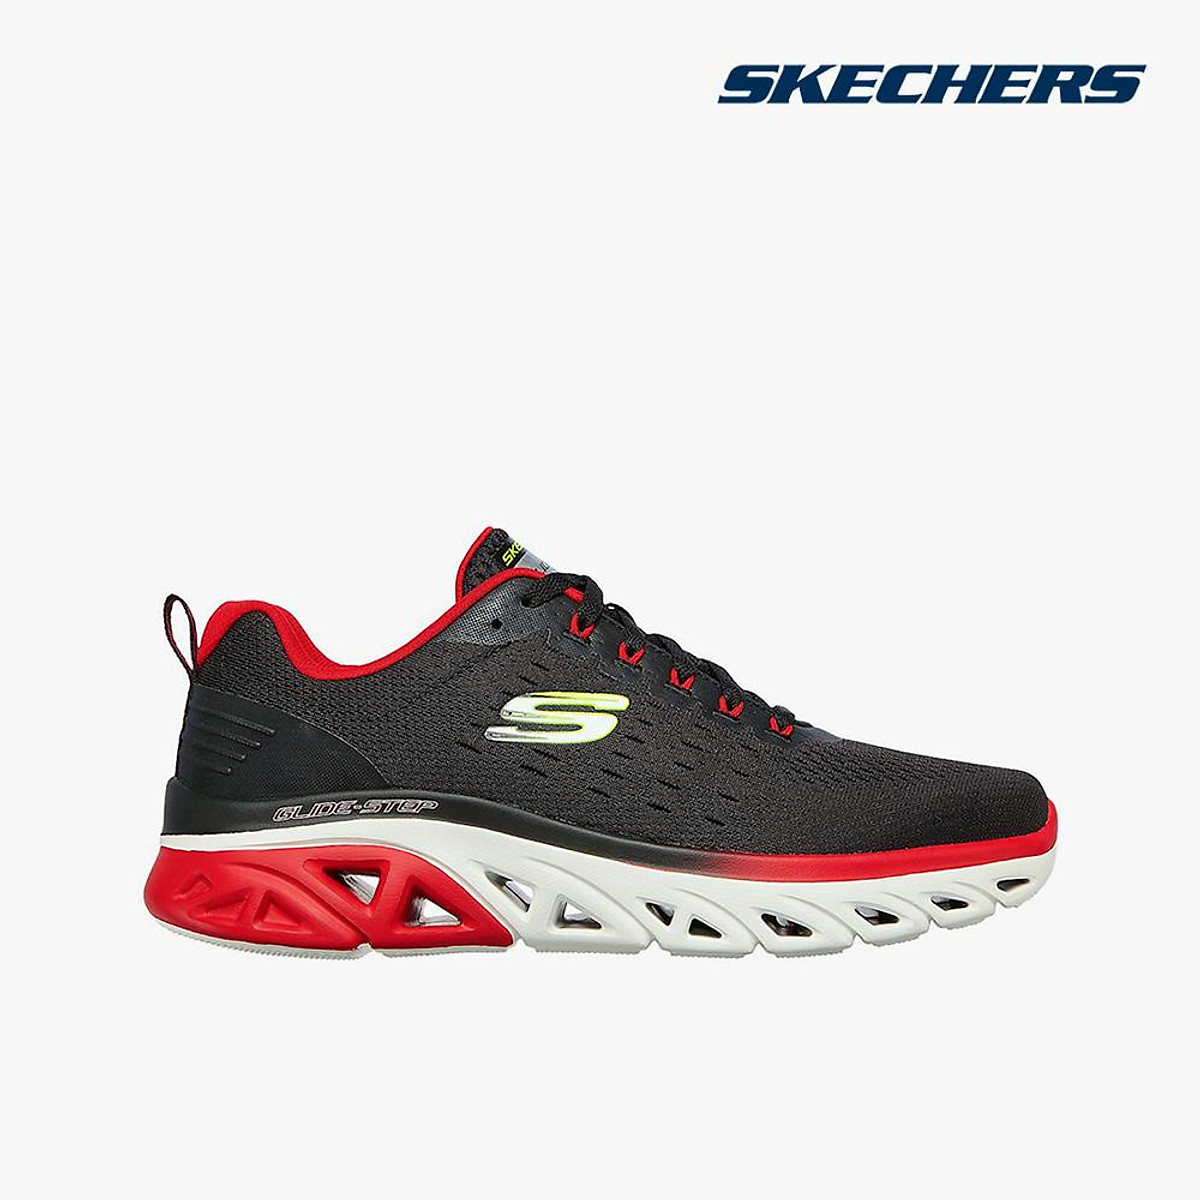 Mua SKECHERS - Giày sneakers nam cổ thấp thắt dây Glide Step Sport  232269-BKMT-10 tại Maison Online